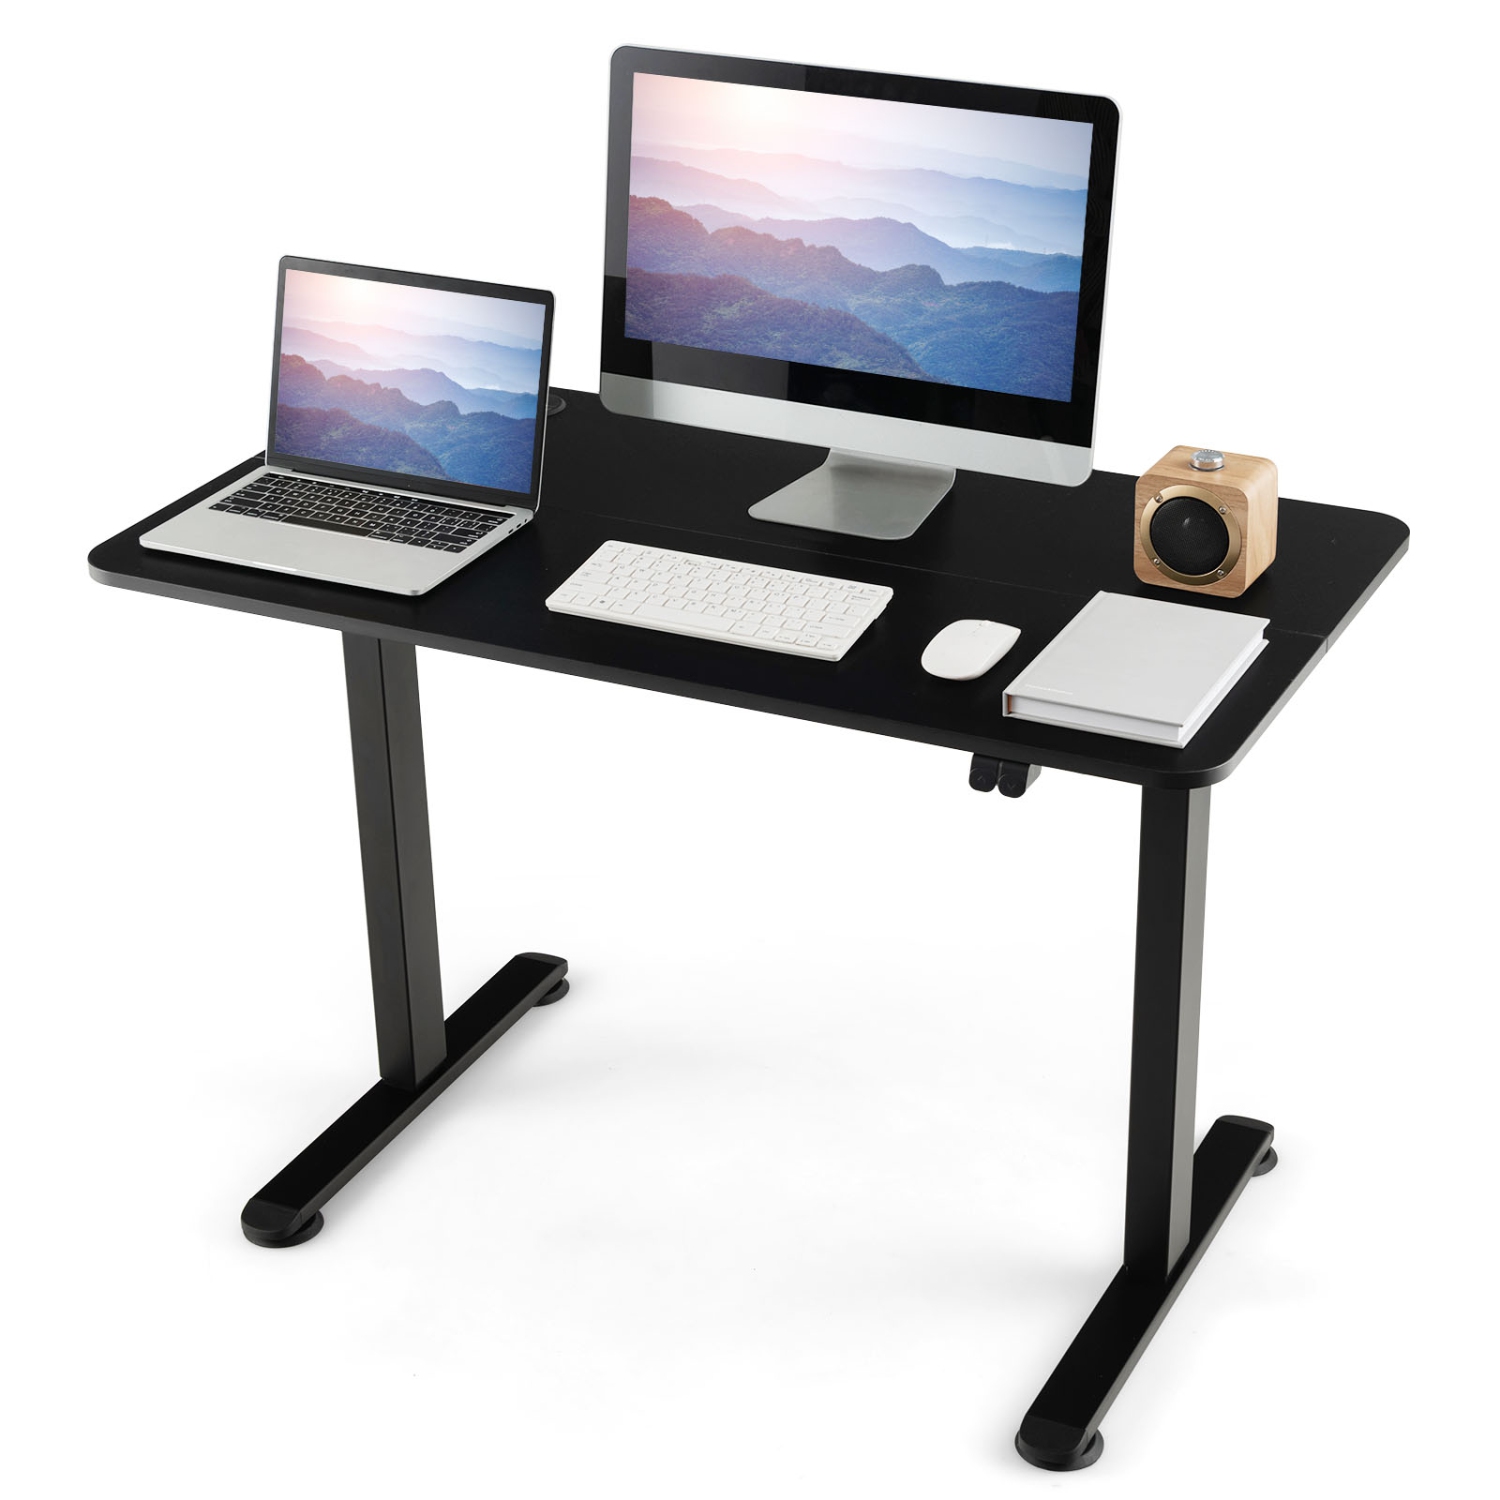 Topbuy Height Adjustable Electric Desk 44" x 24" Sit to Stand Desk w/ Splice Board Sturdy T-shaped Metal Bracket